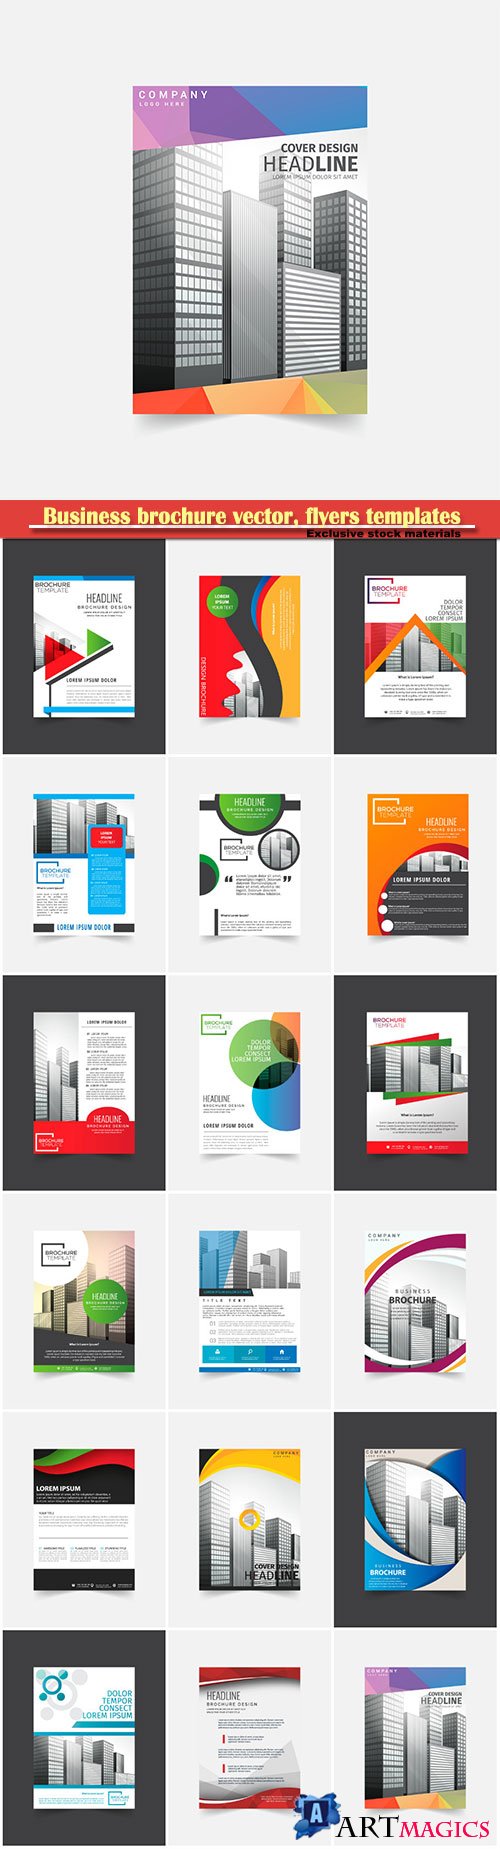 Business brochure vector, flyers templates, report cover design # 105